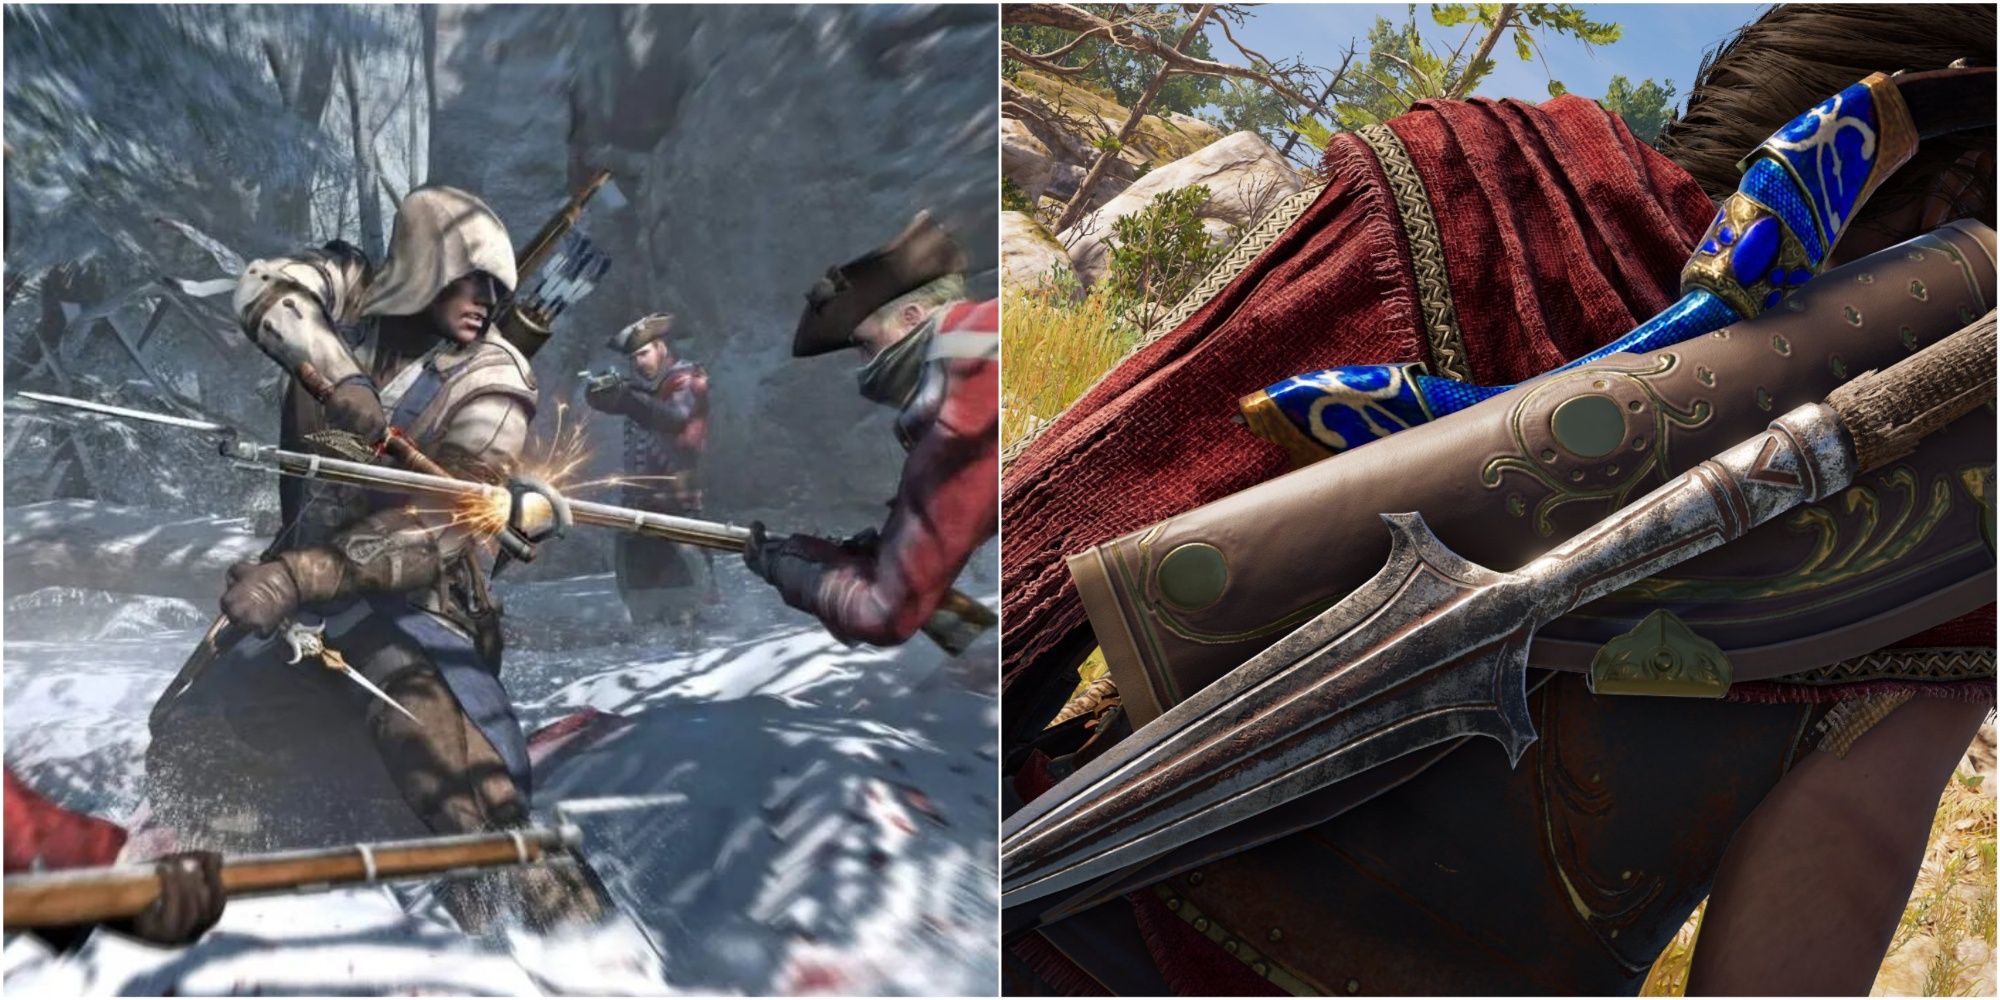 Assassin's Creed Revelations Altaïr Outfit, Vlad The Impaler's Sword  (Unique Animations) 